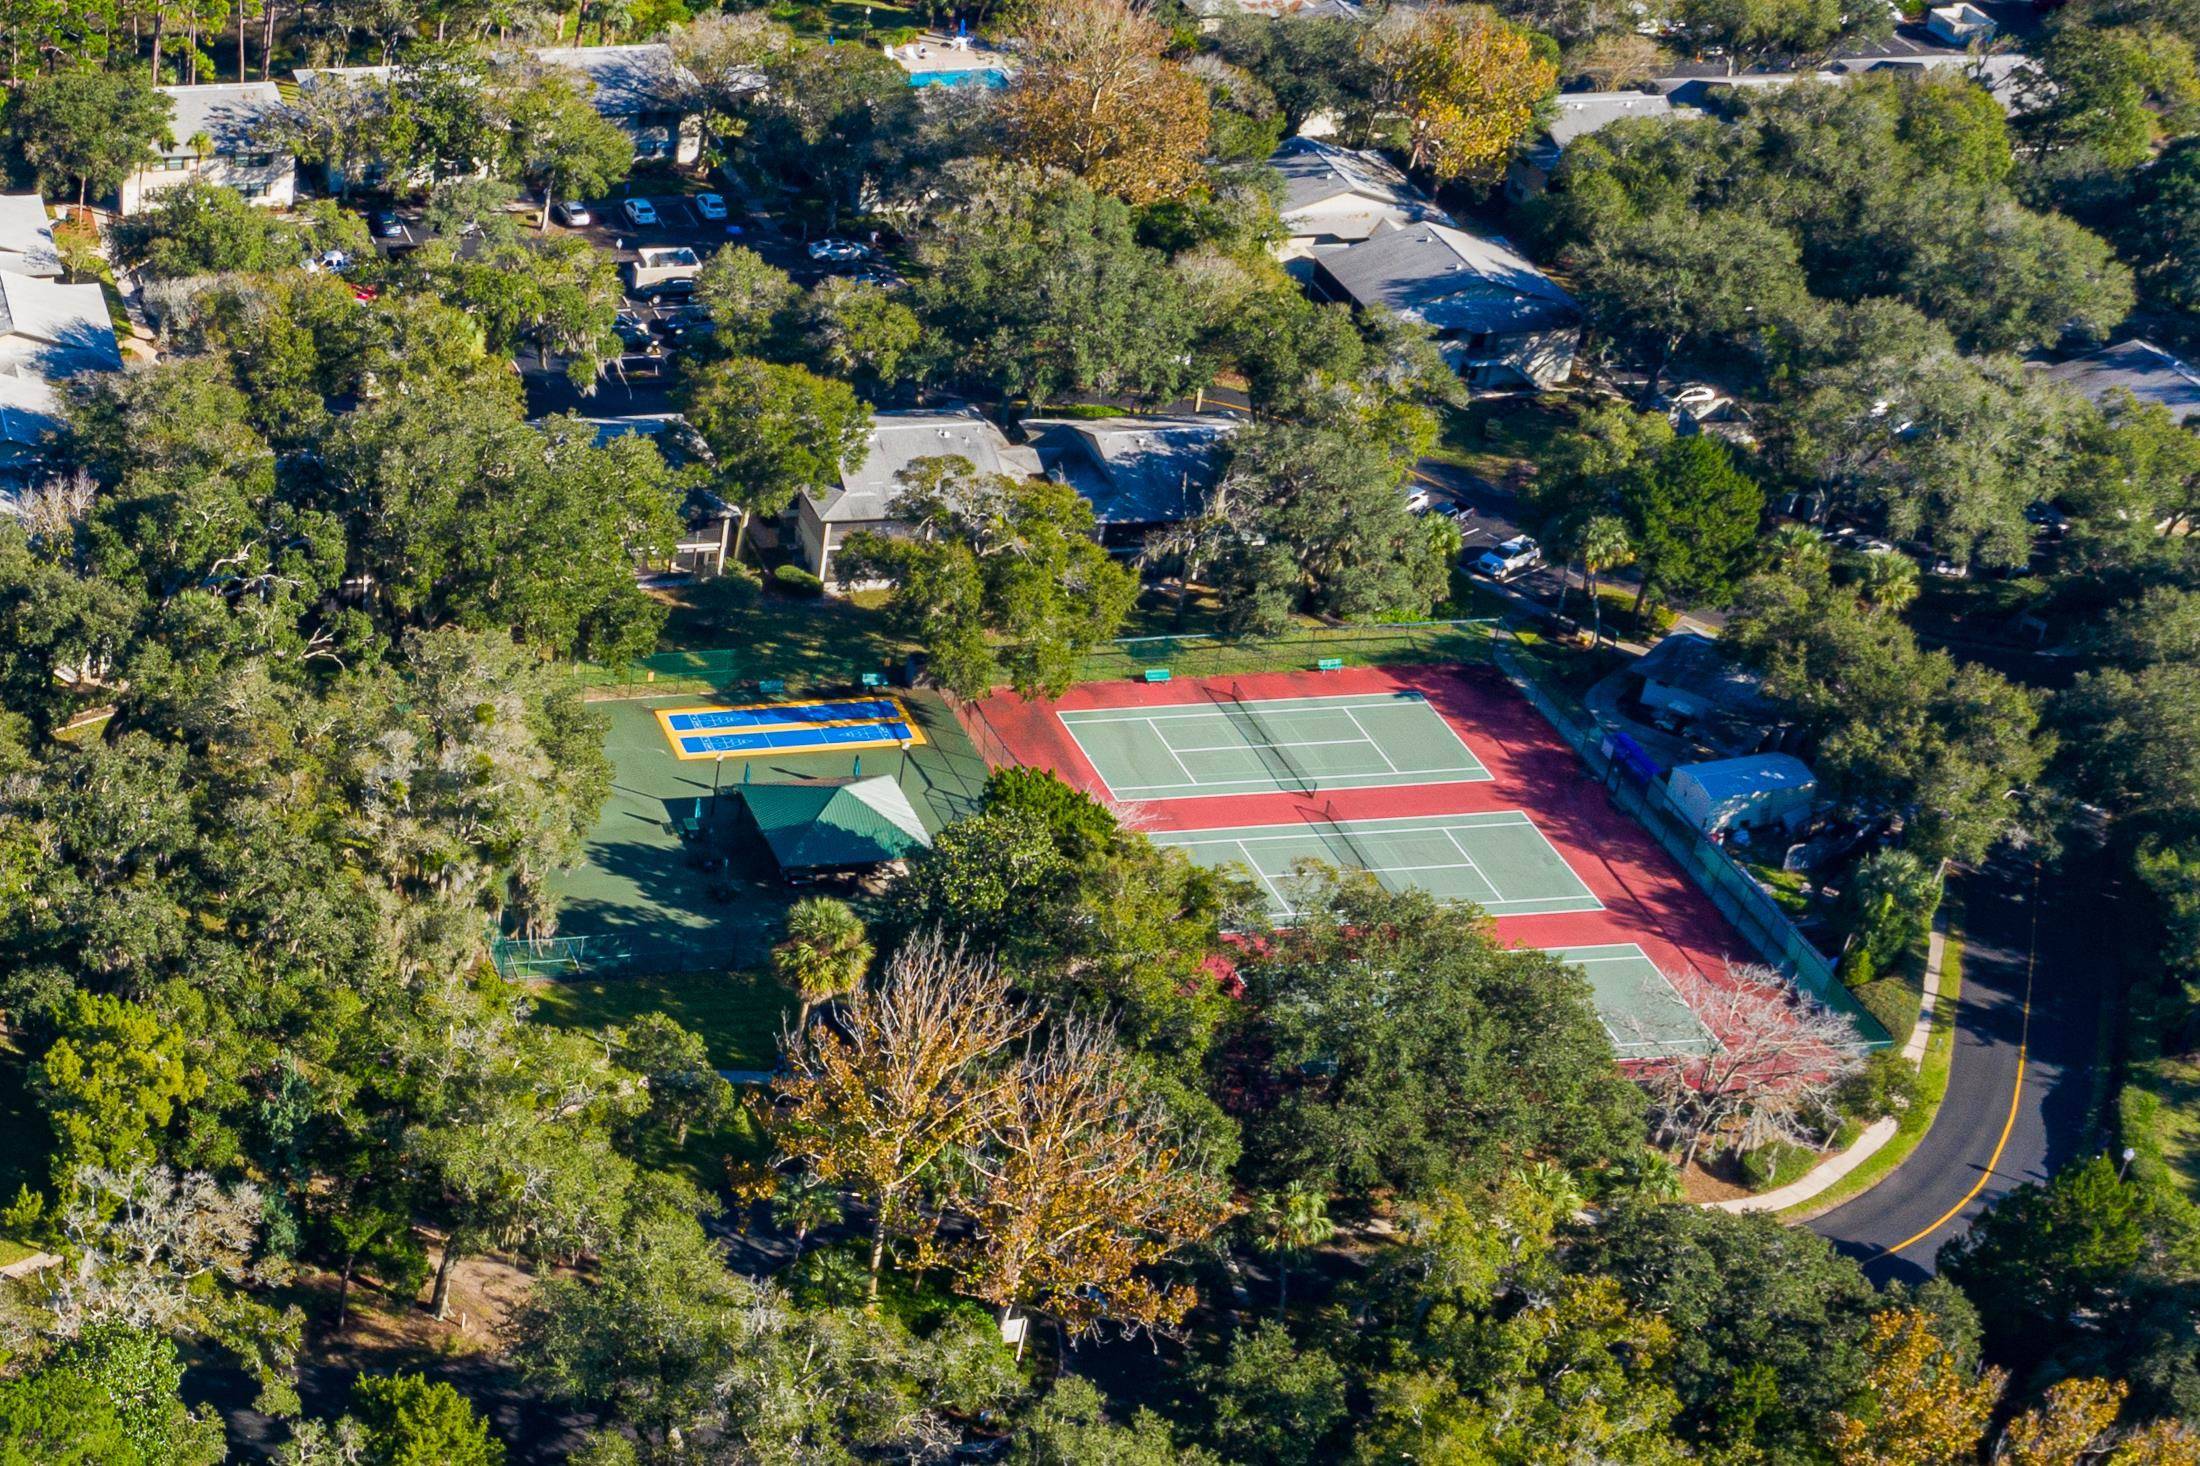 conq-tennis-courts-drone